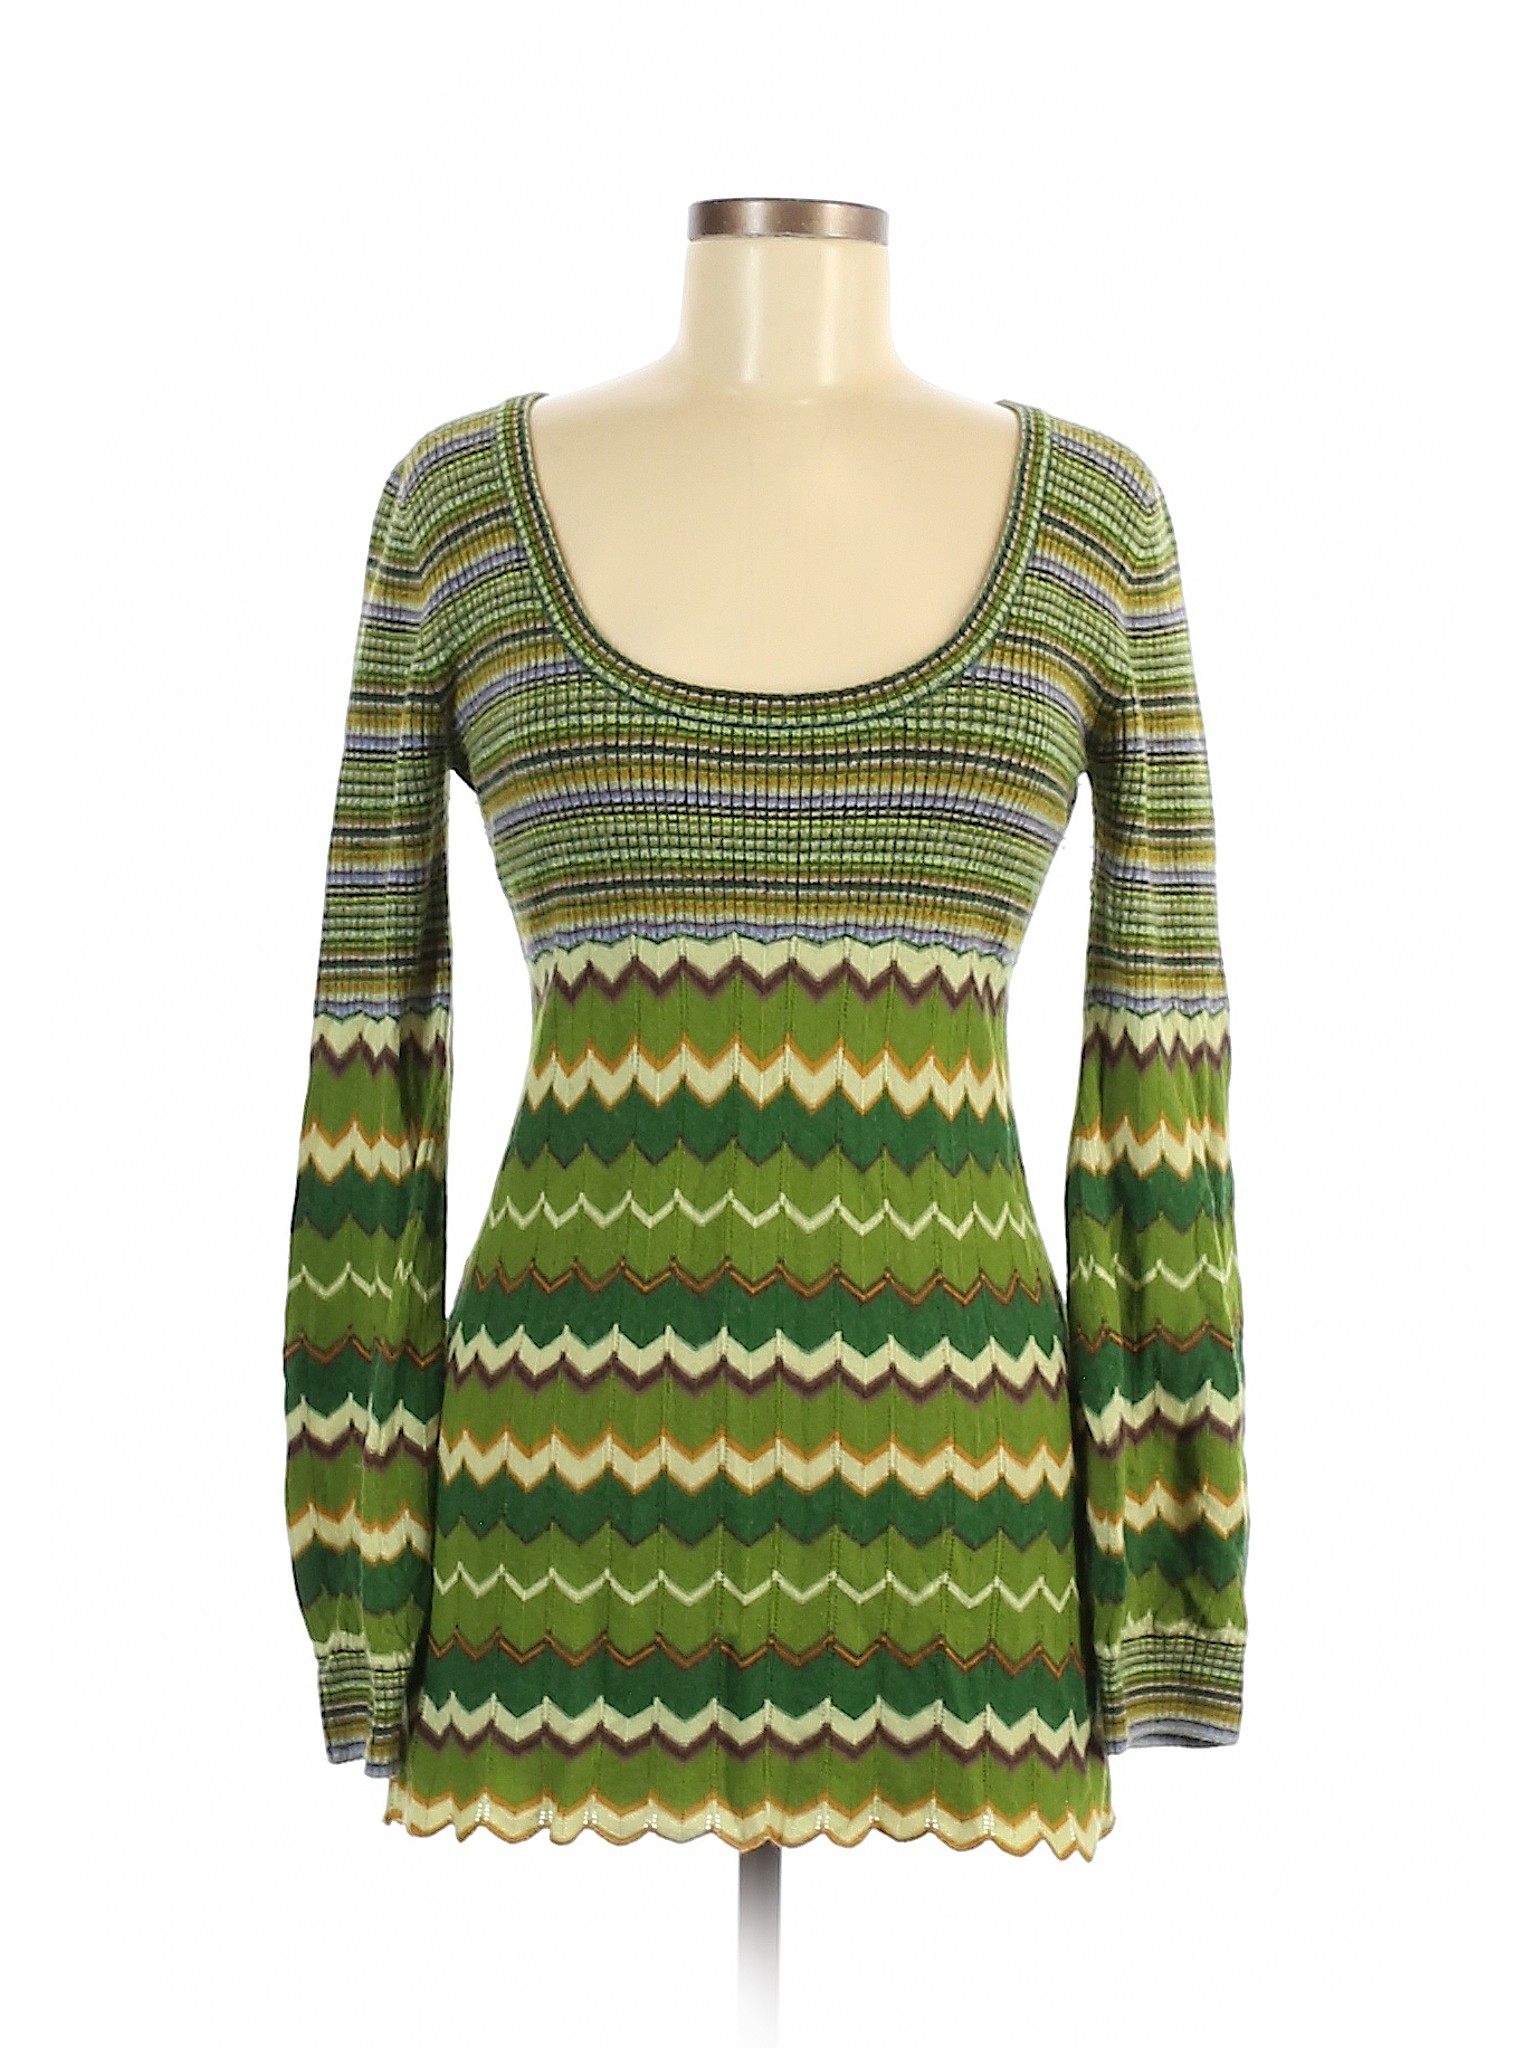 Free People Women Green Pullover Sweater M | eBay